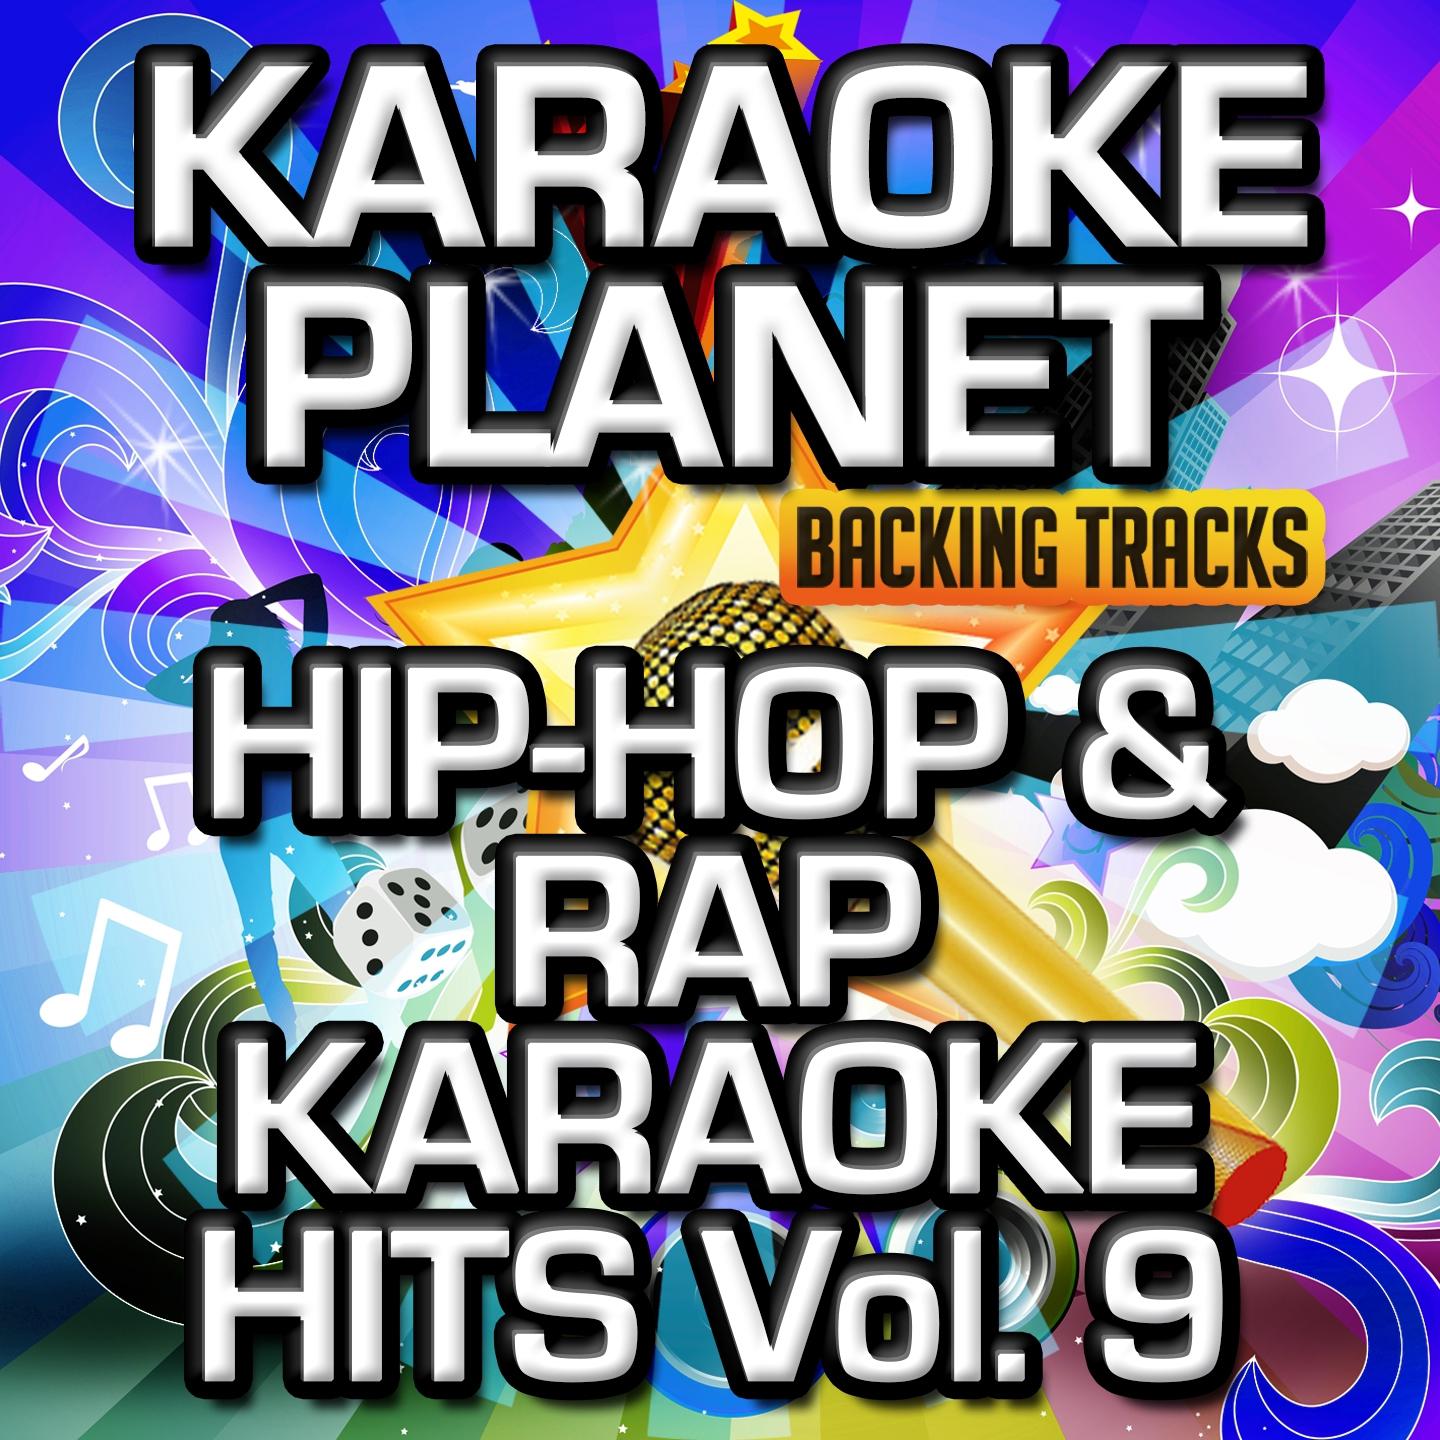 Hip-Hop & Rap Karaoke Hits, Vol. 9